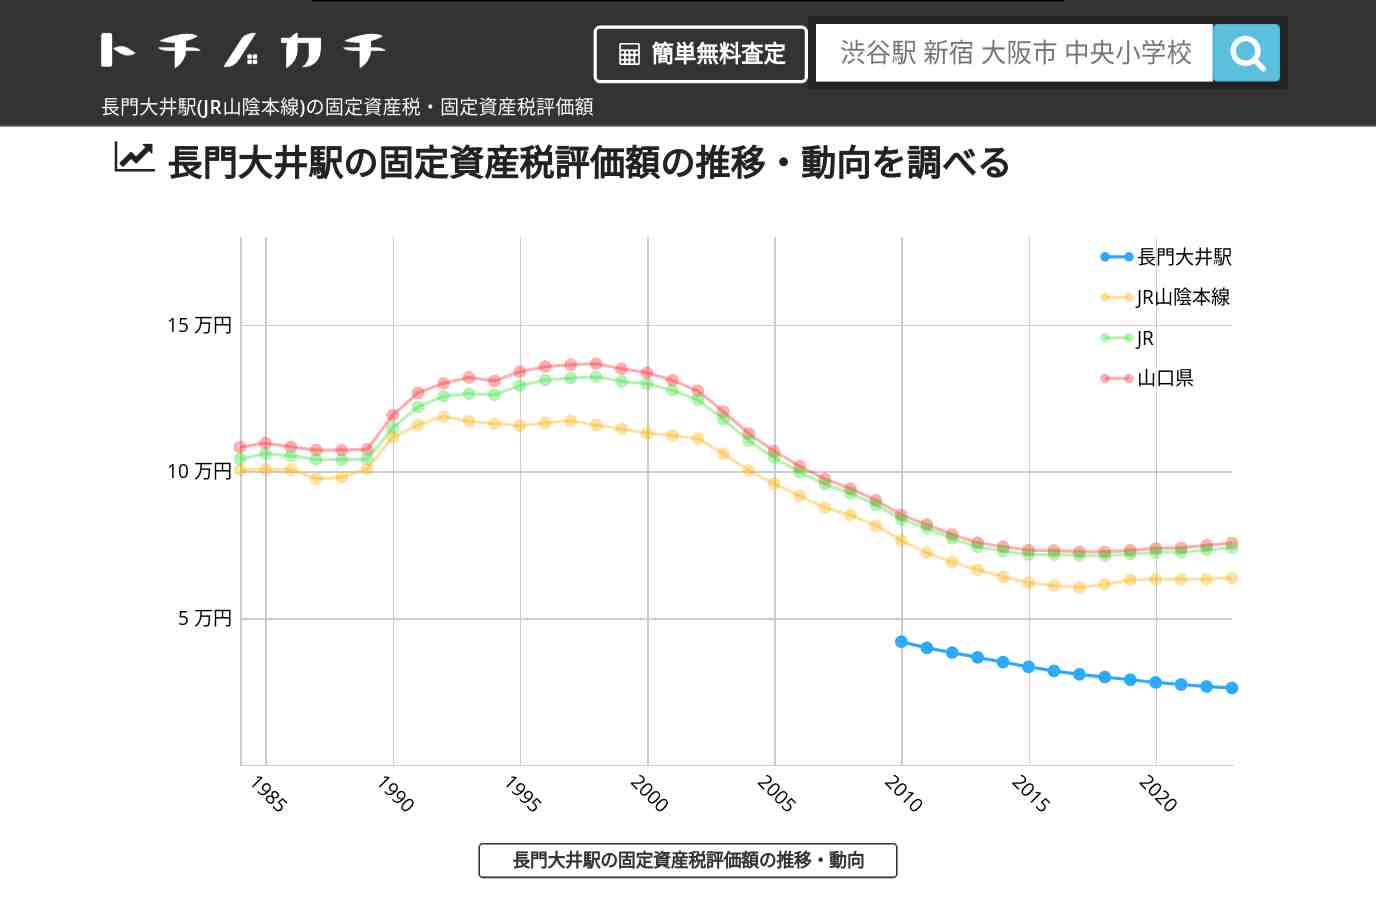 長門大井駅(JR山陰本線)の固定資産税・固定資産税評価額 | トチノカチ